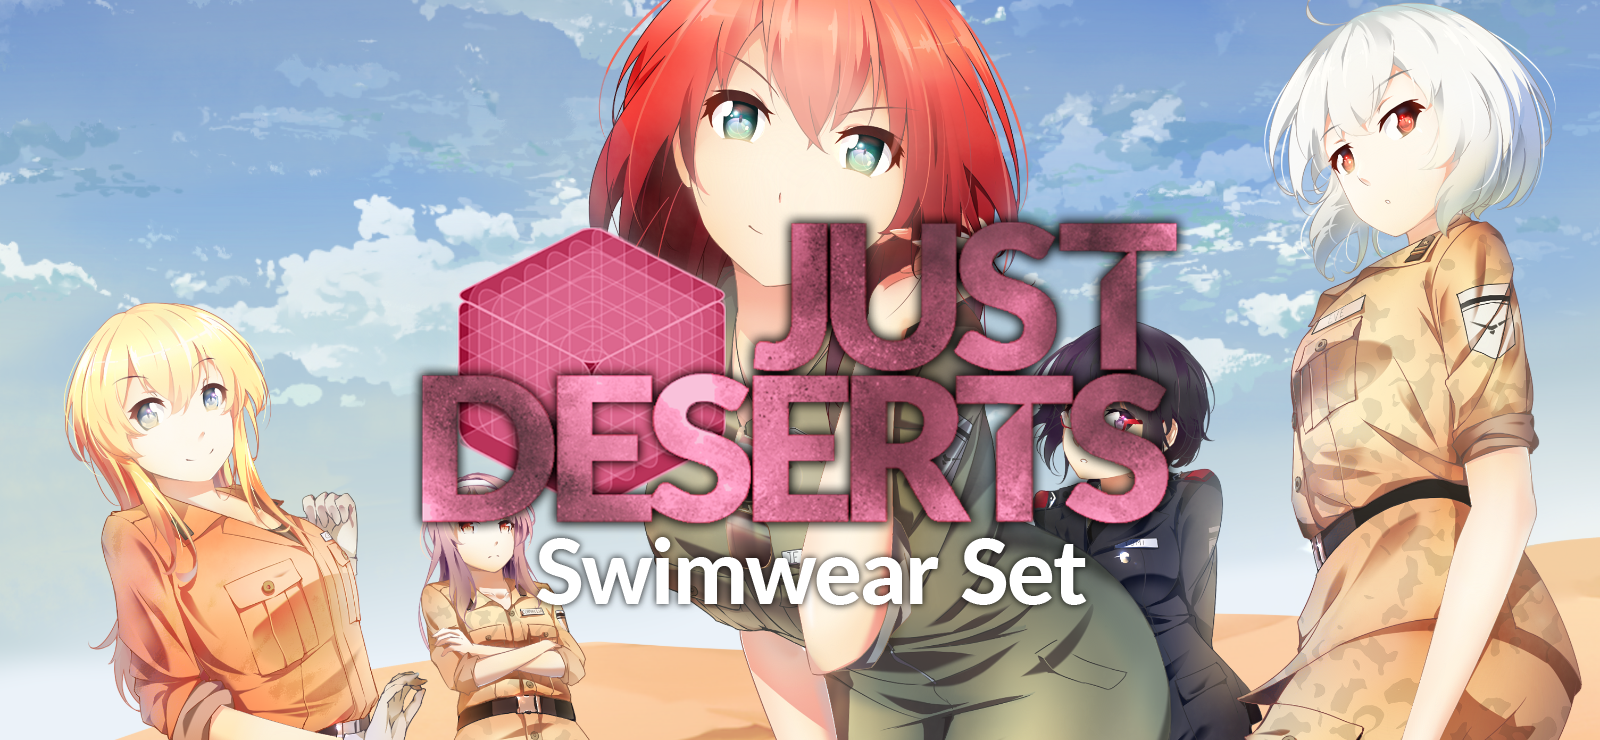 Just Deserts: Swimwear Set